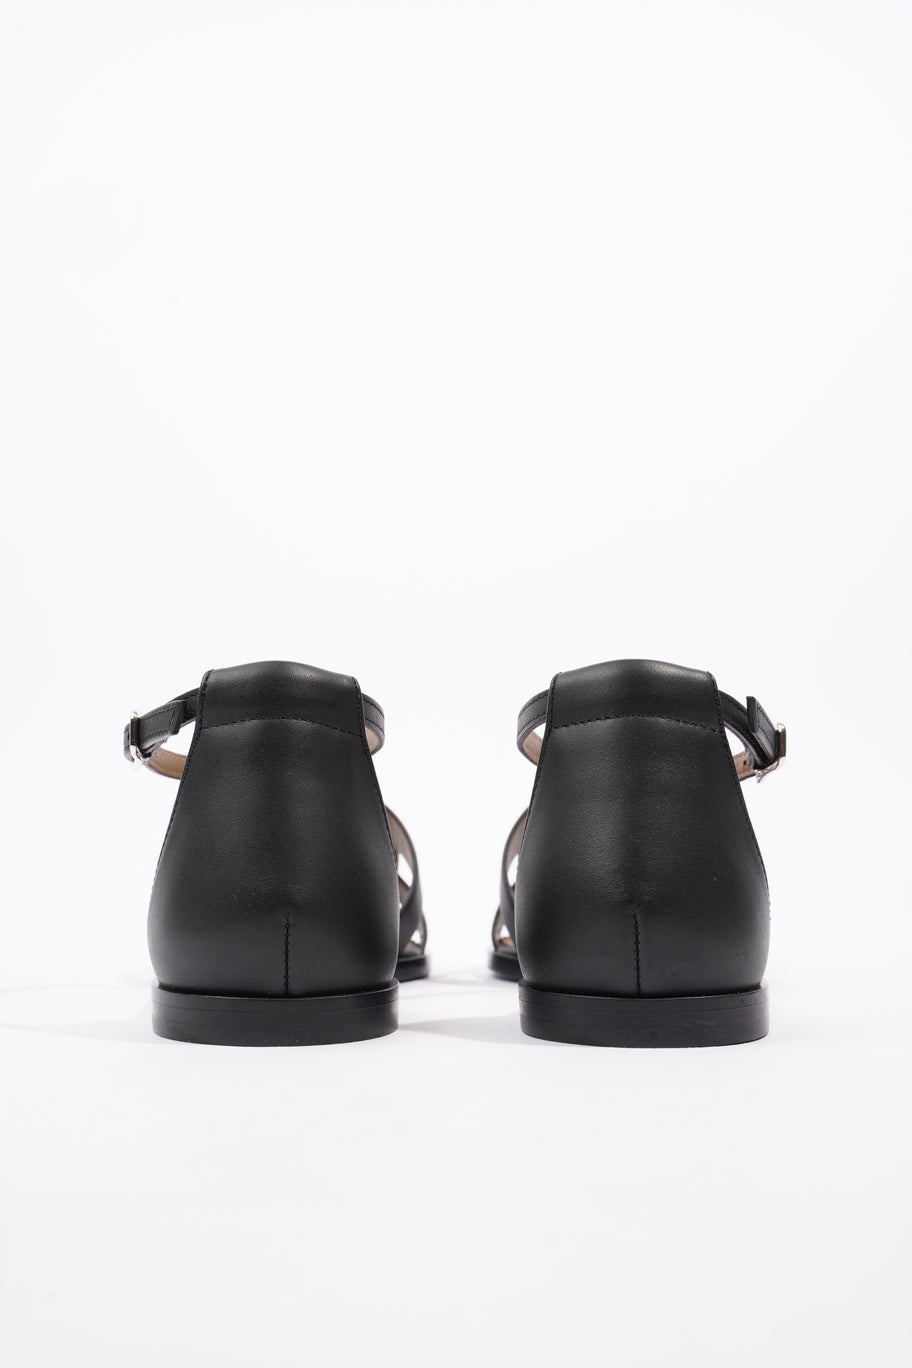 Hermes Santorini Sandals Black Calfskin Leather EU 37 UK 4 Image 6